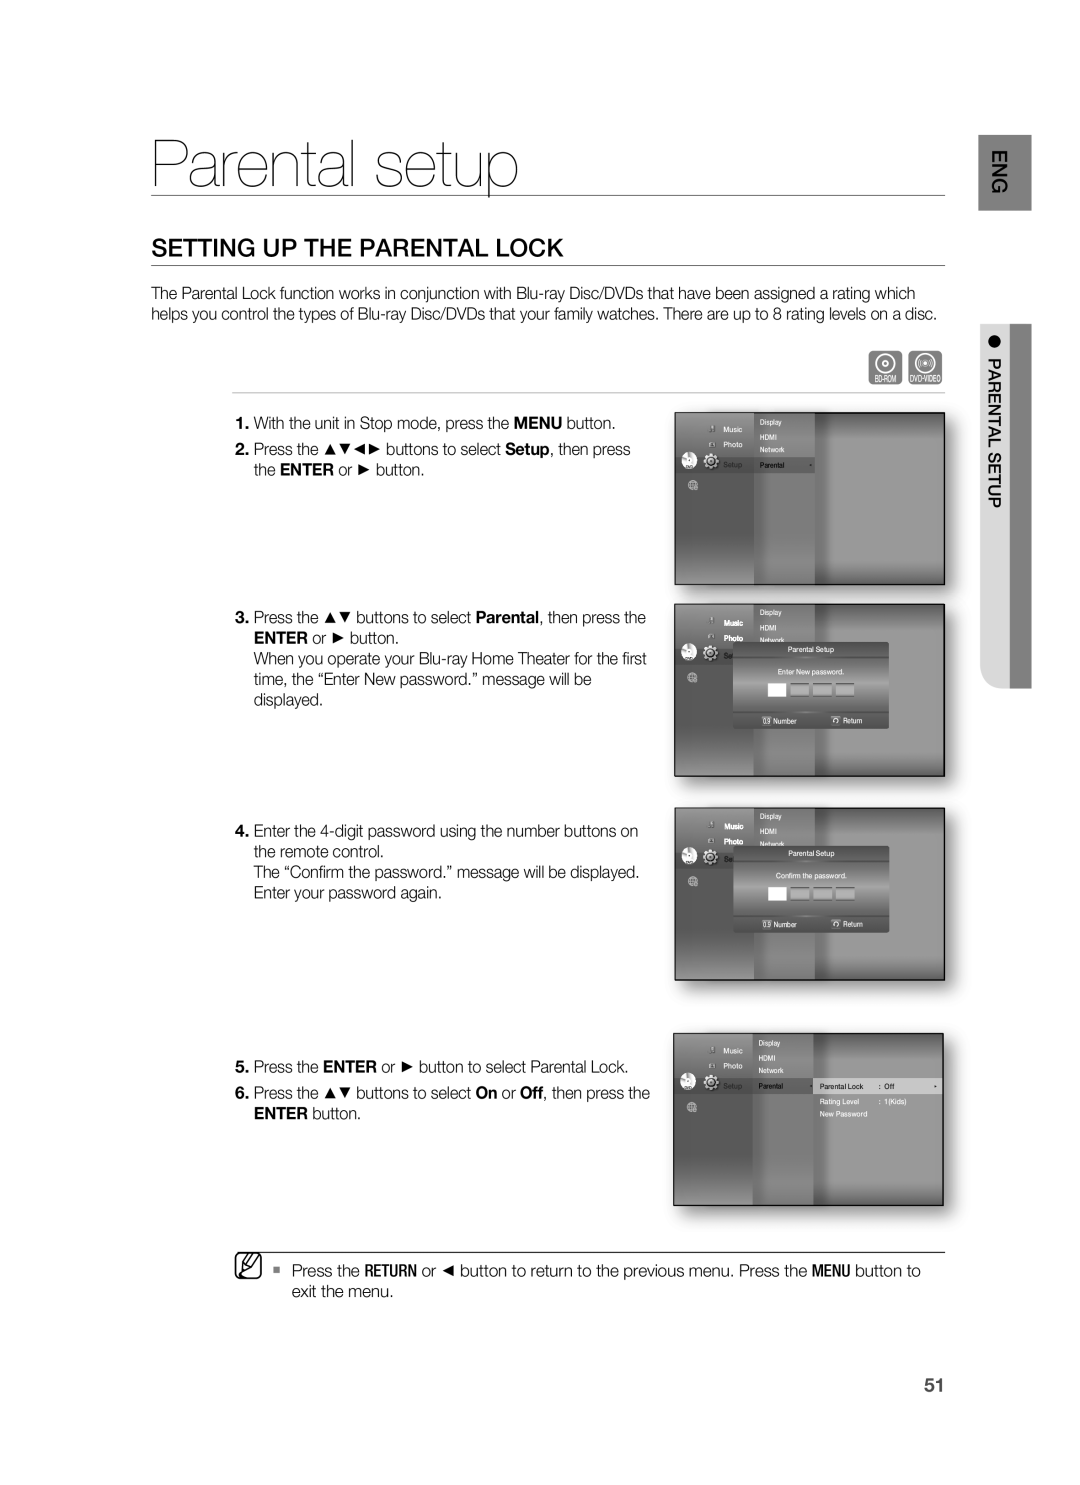 Samsung HT-BD3252 user manual Parental setup, Setting Up The Parental Lock, the ENTER or button, displayed, ENTER button 